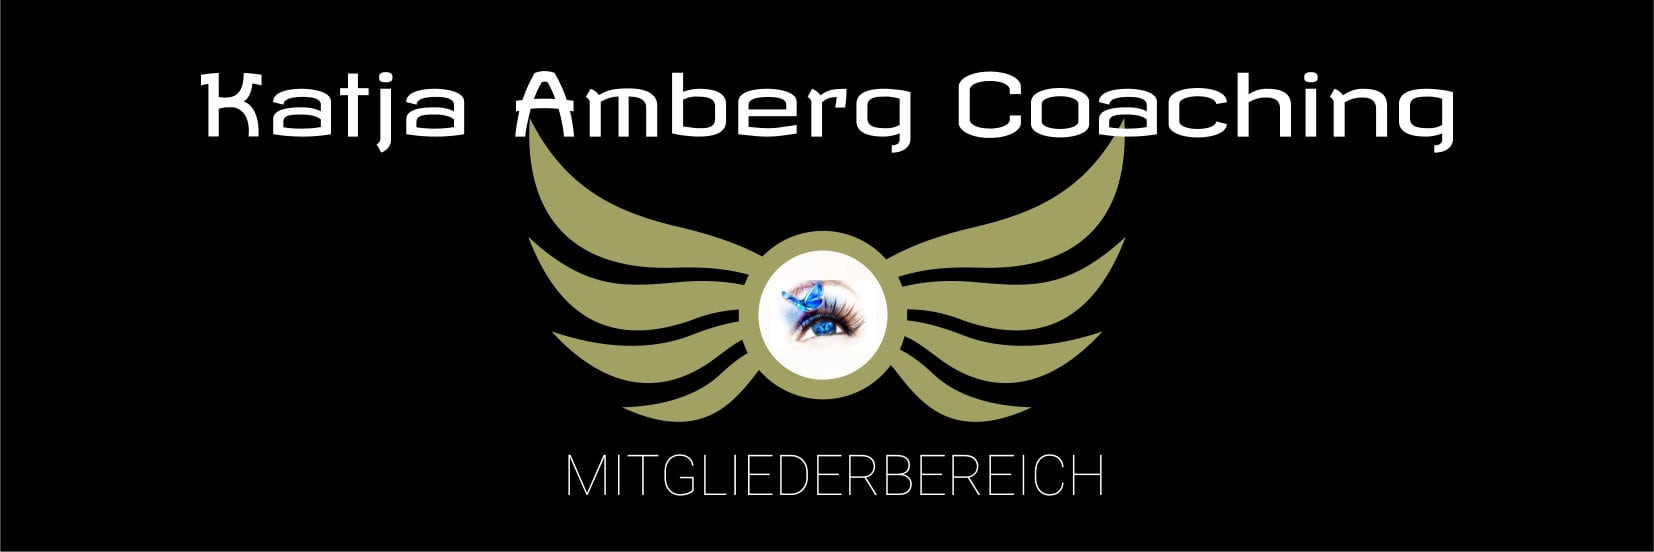 Katja Amberg Coaching Mitgliederbereich